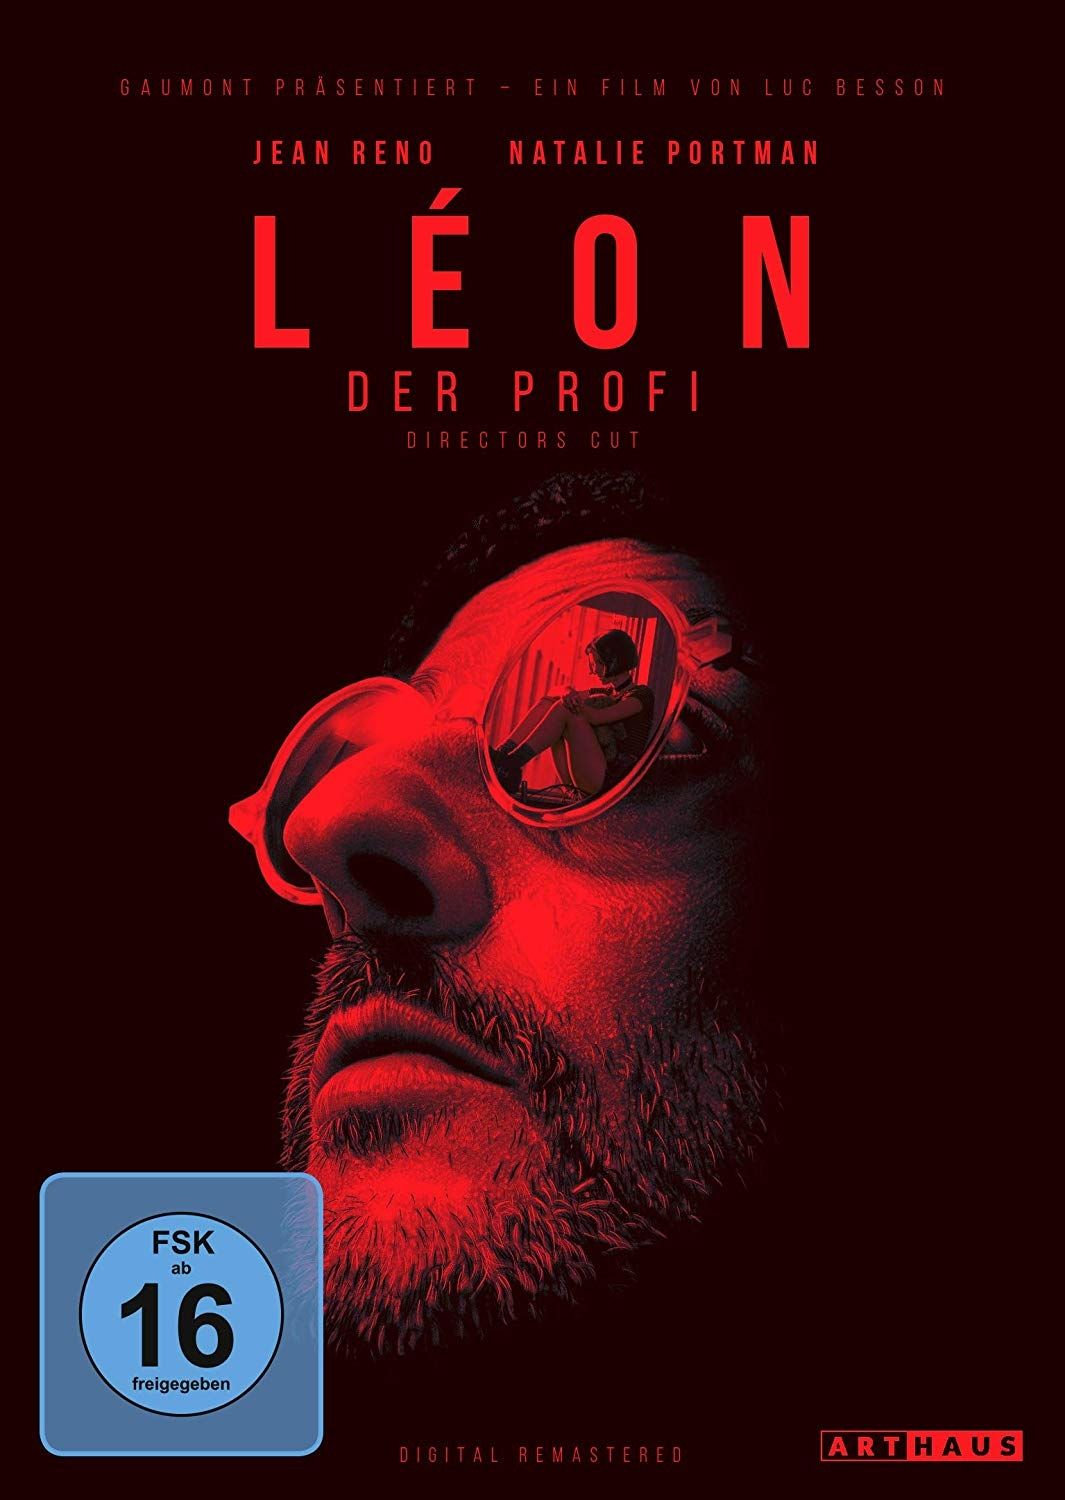 Leon - Der Profi (Director's Cut) (Digital Remastered)